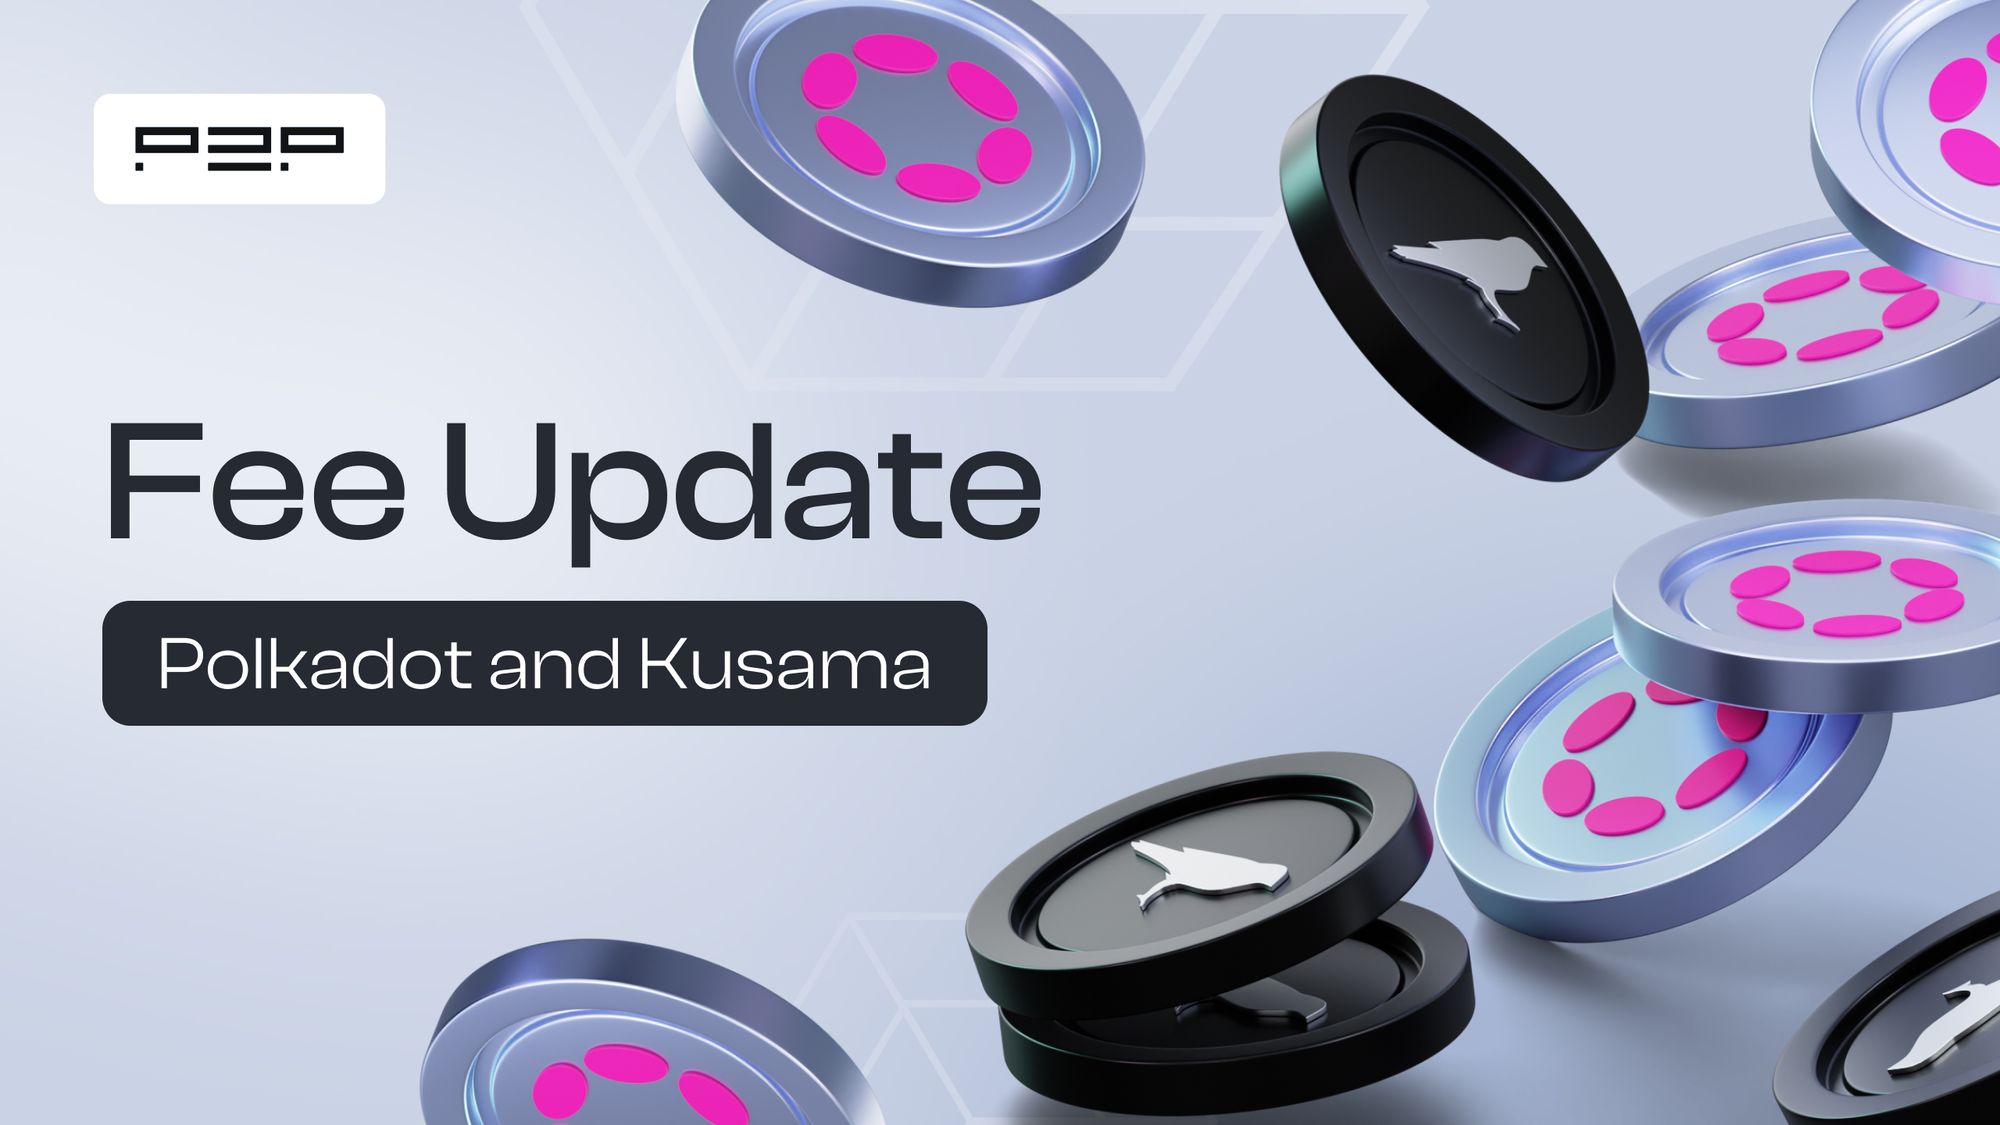 Fee Update for Polkadot & Kusama Networks